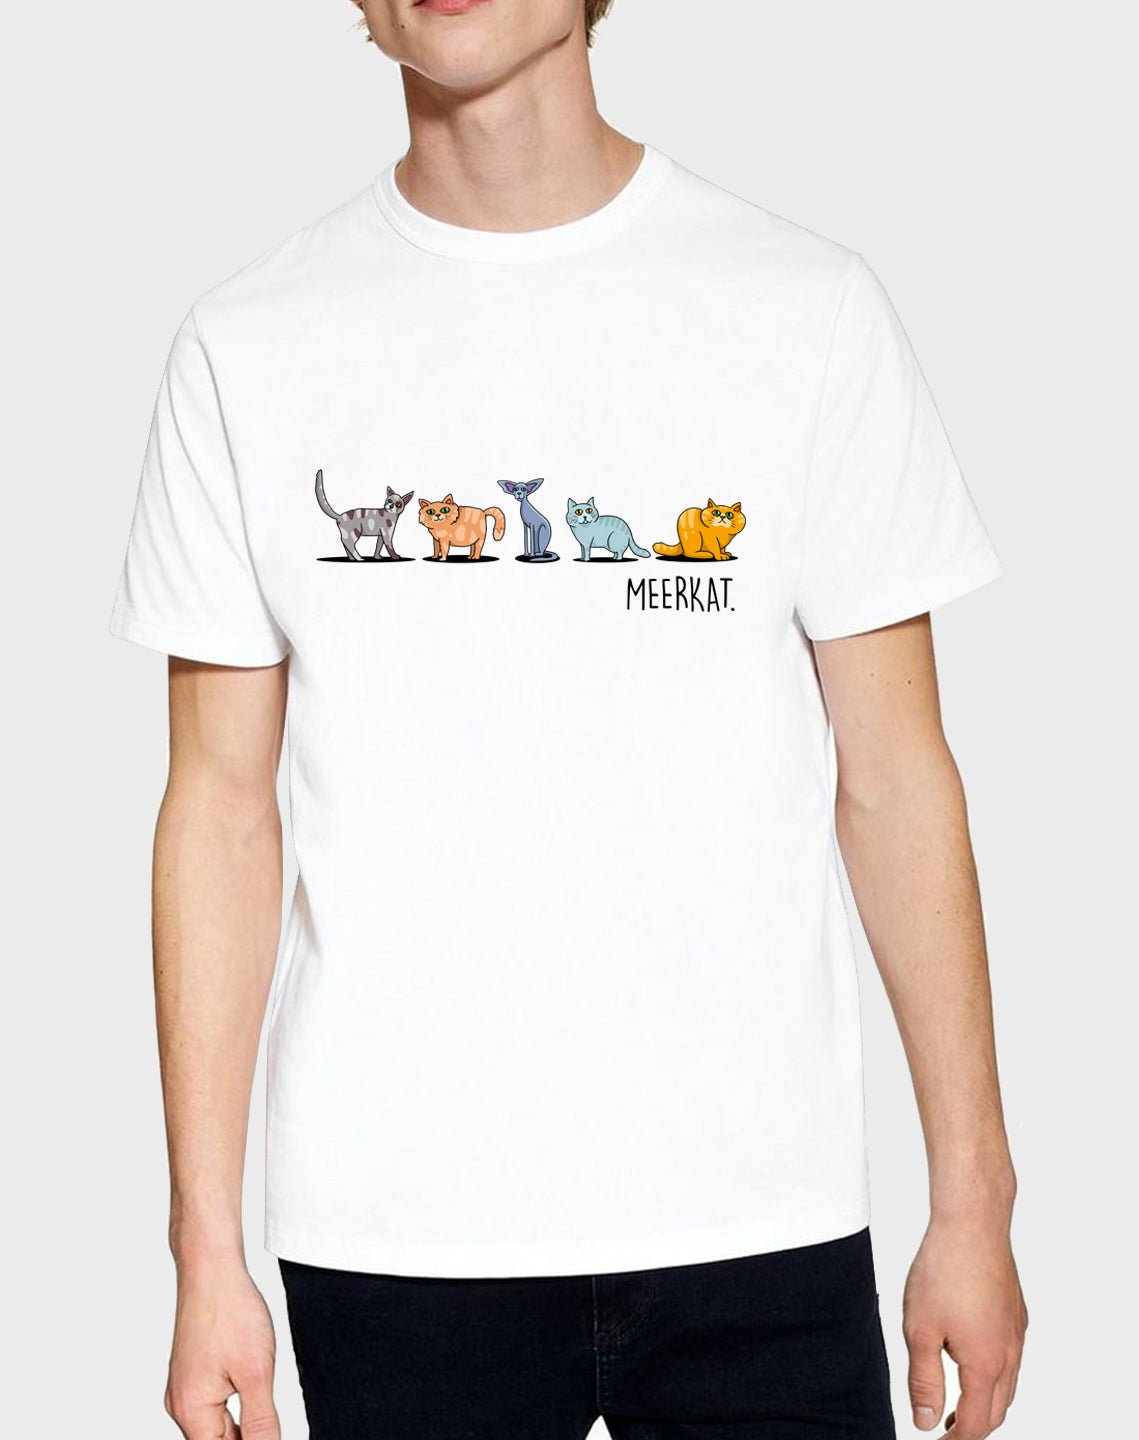 Idees Vol Vrees Meerkat Men's T-shirt - komedie